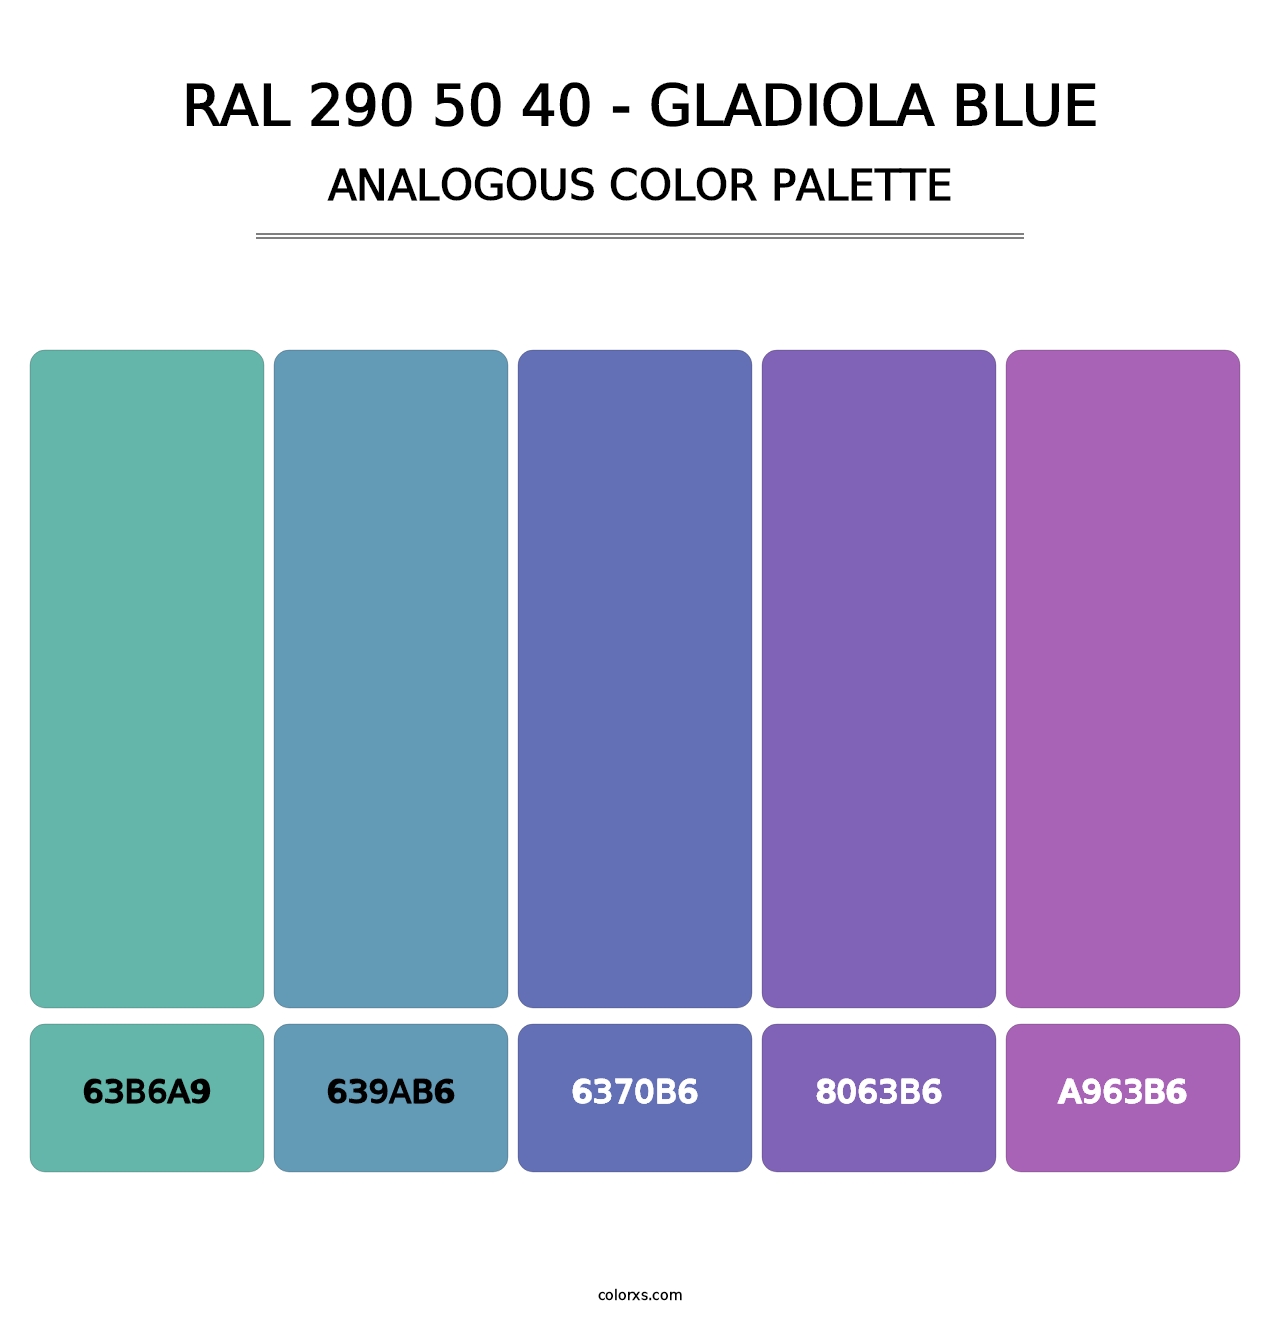 RAL 290 50 40 - Gladiola Blue - Analogous Color Palette